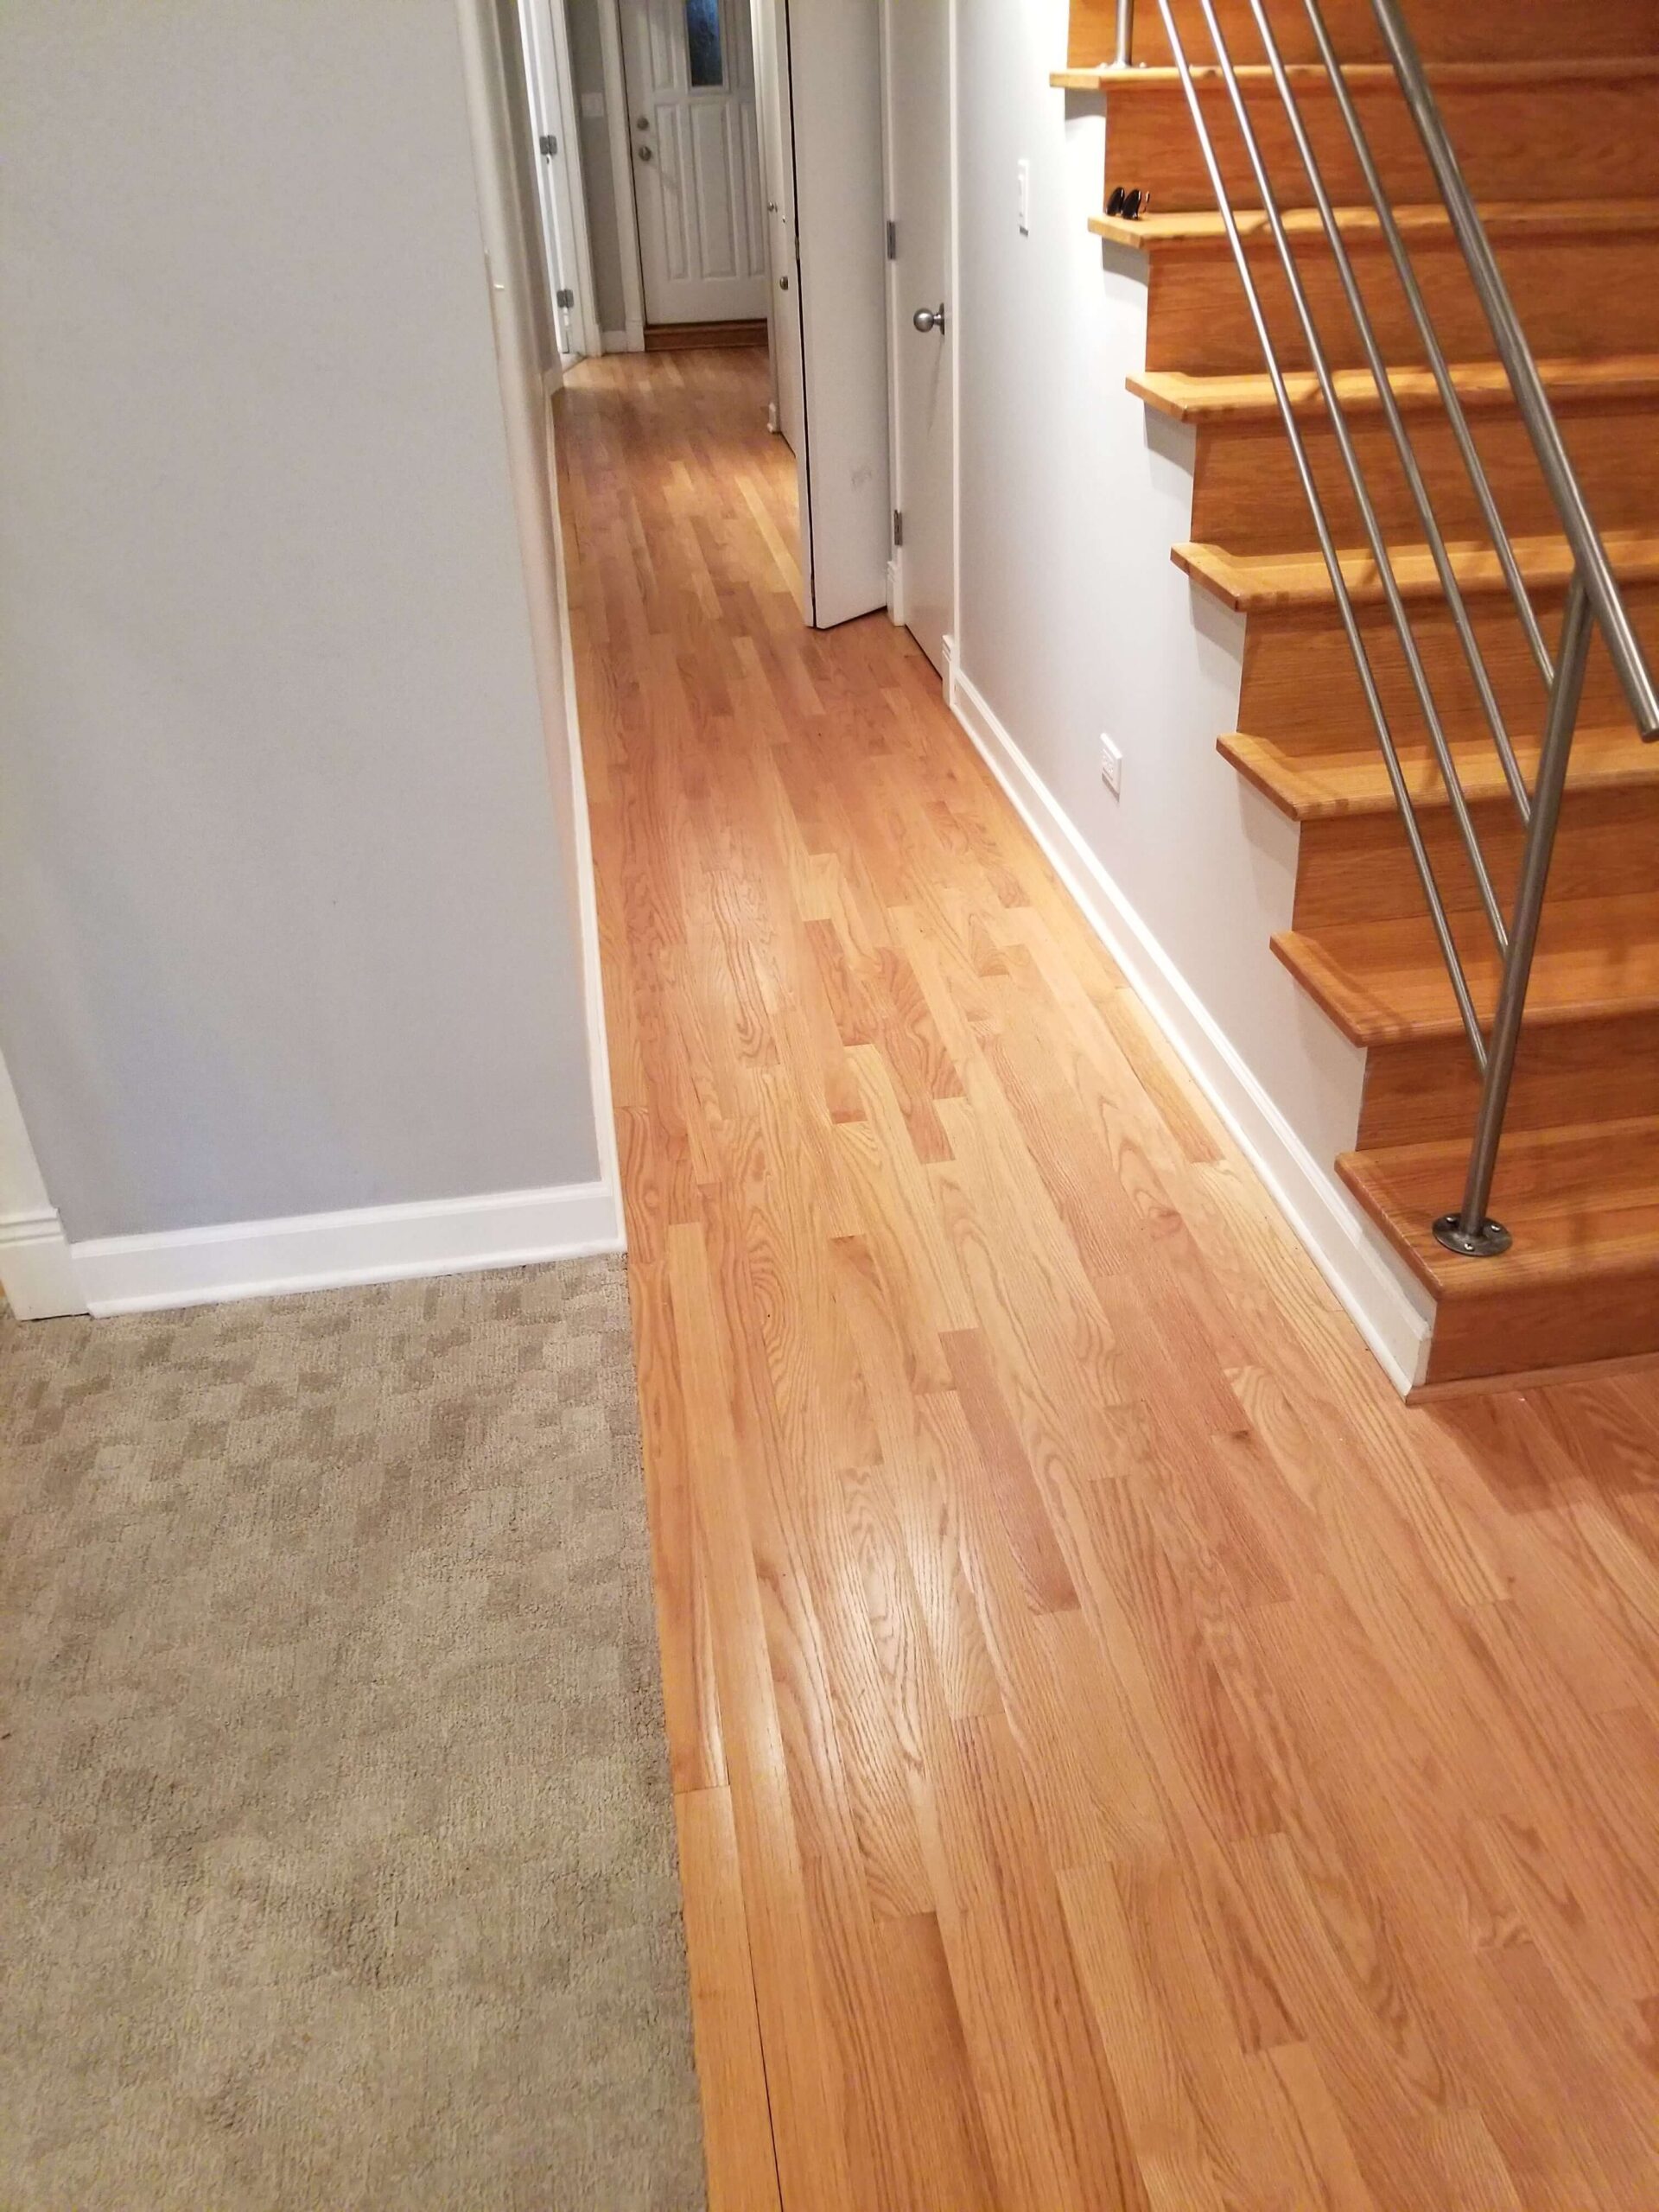 Hardwood floors refinishing, new carpet installation, painting and new railing